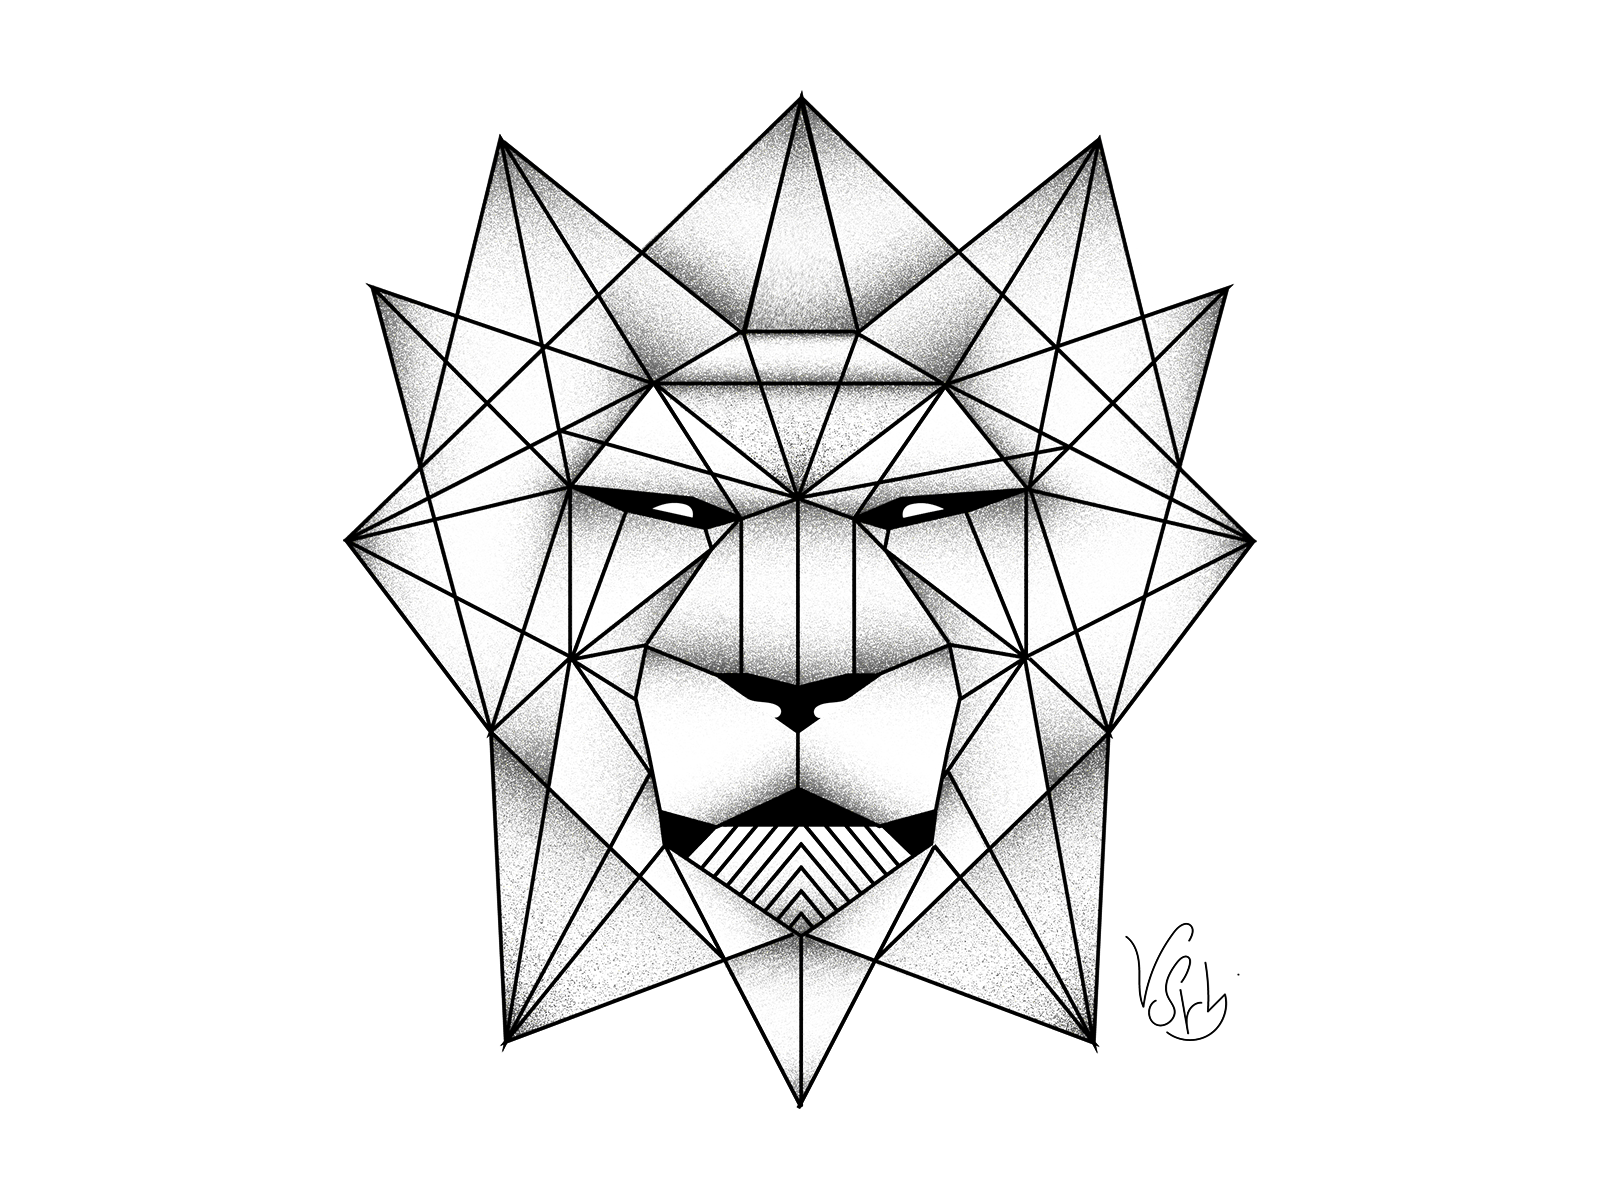 ArtStation - Lion tattoo design